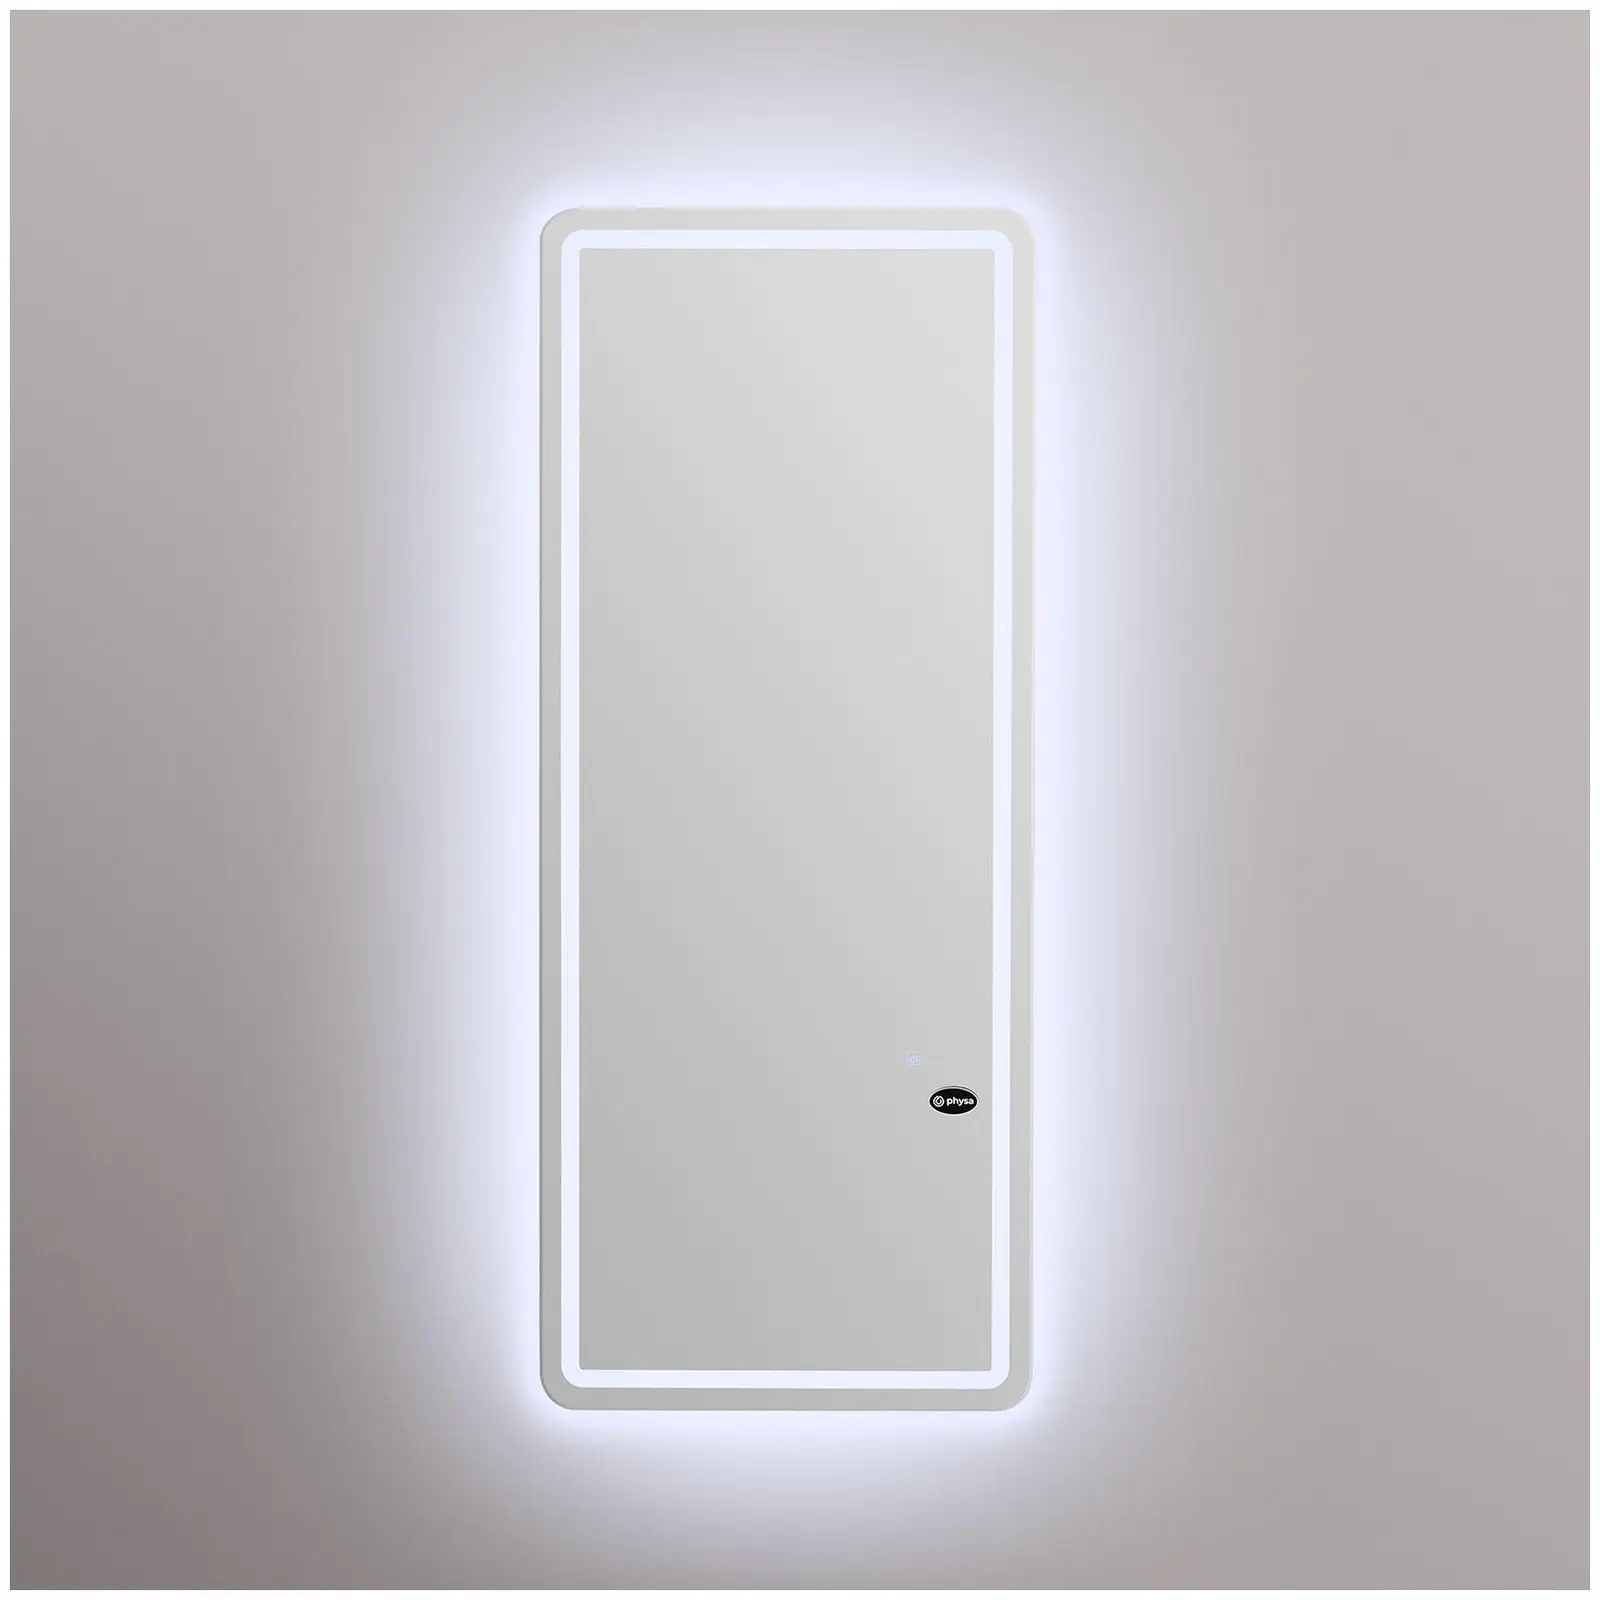 Kadeřnické zrcadlo - extra ploché - LED - obdélníkový tvar - 170 x 70 x 3 cm